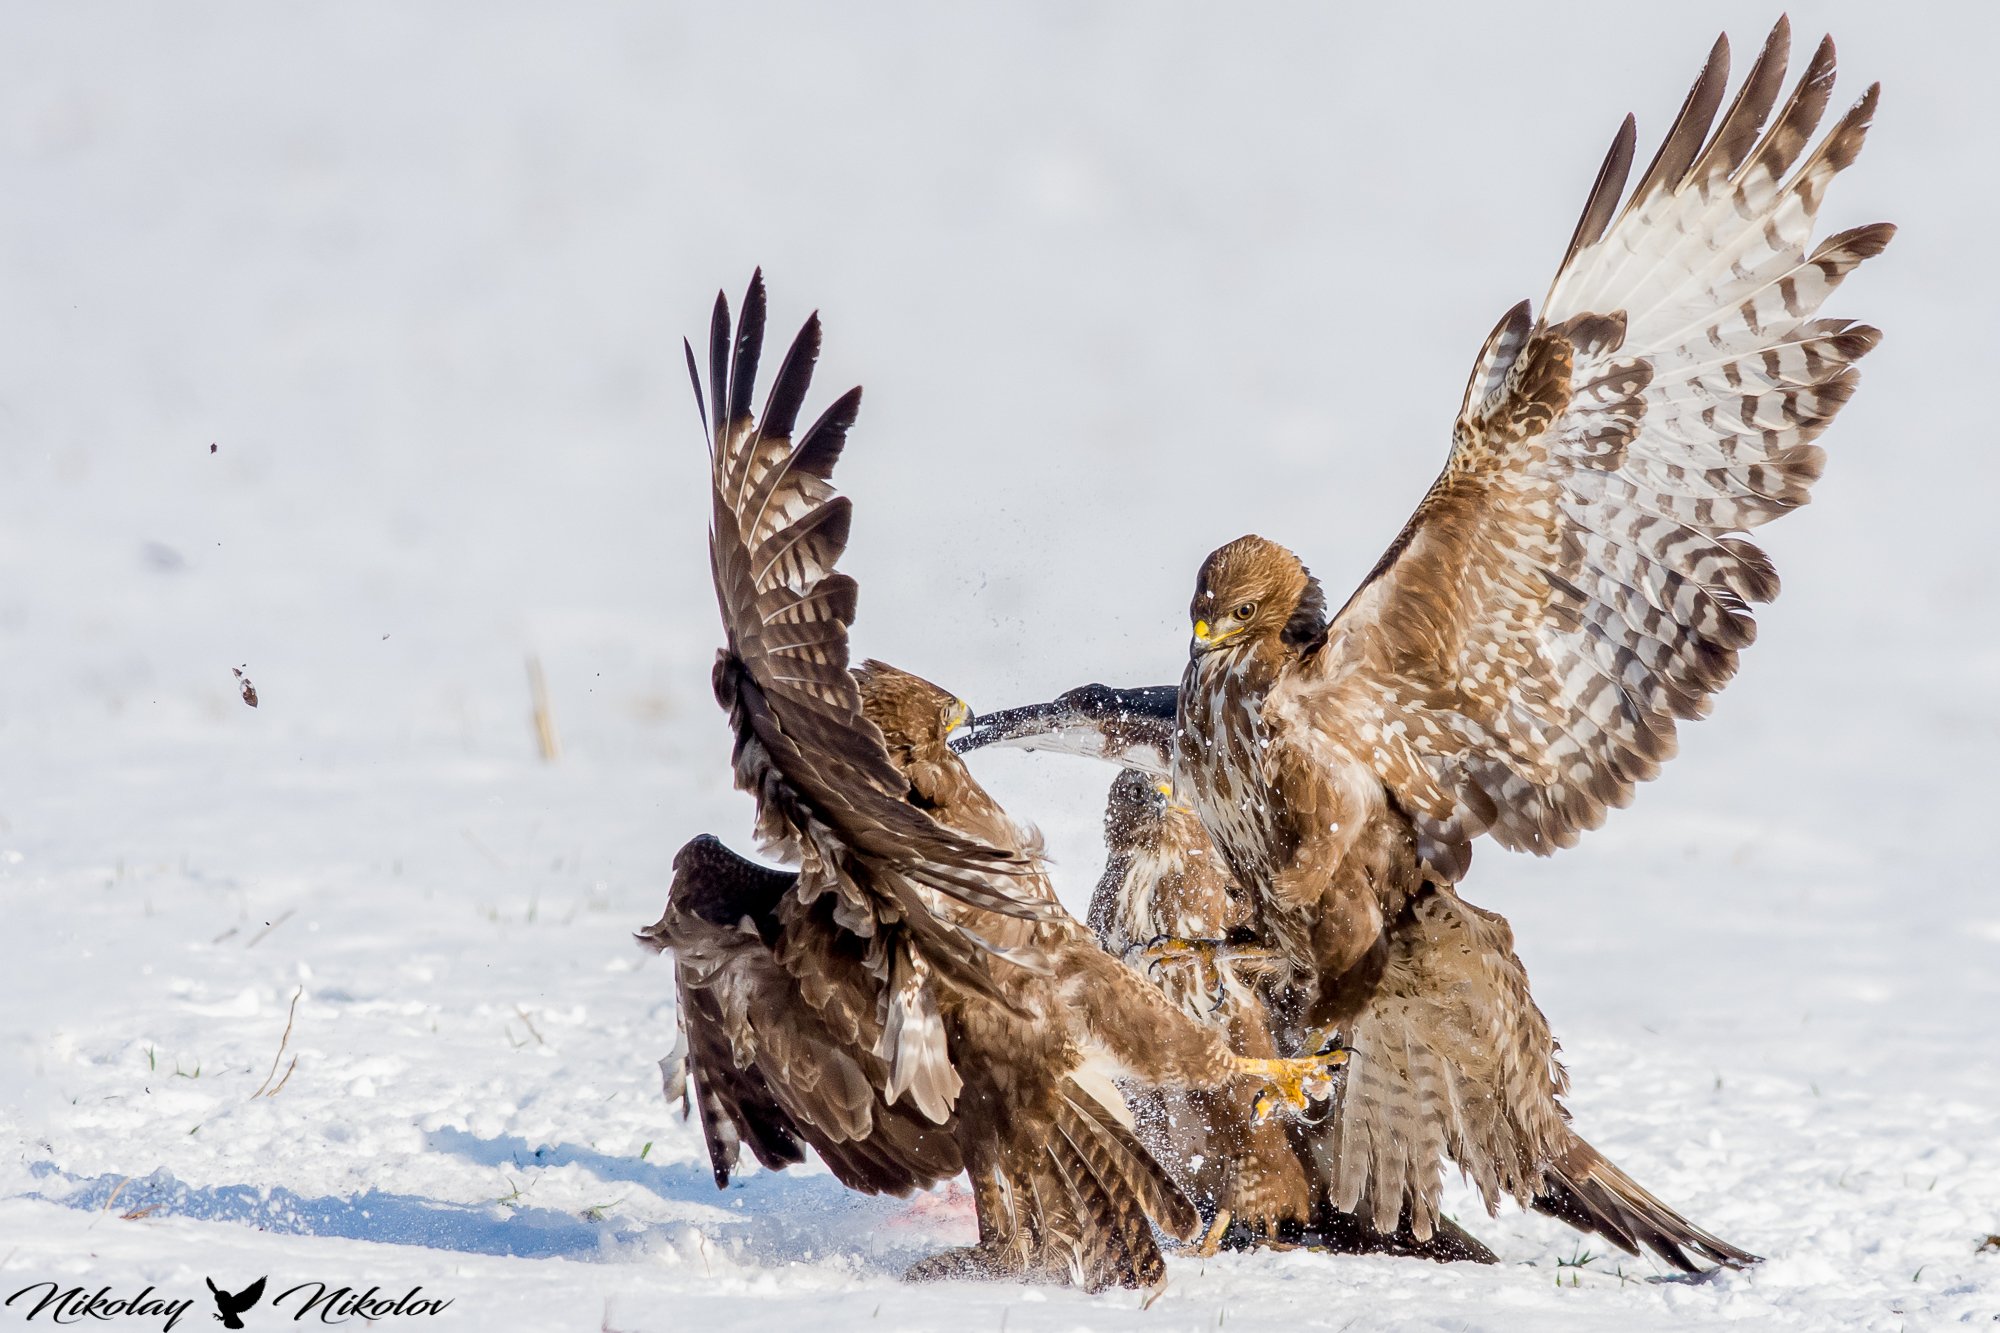 supremacy,common_buzzard,winter,snow,action,birds,wildlife,nature,lanscape,fight, Nikolay Nikolov